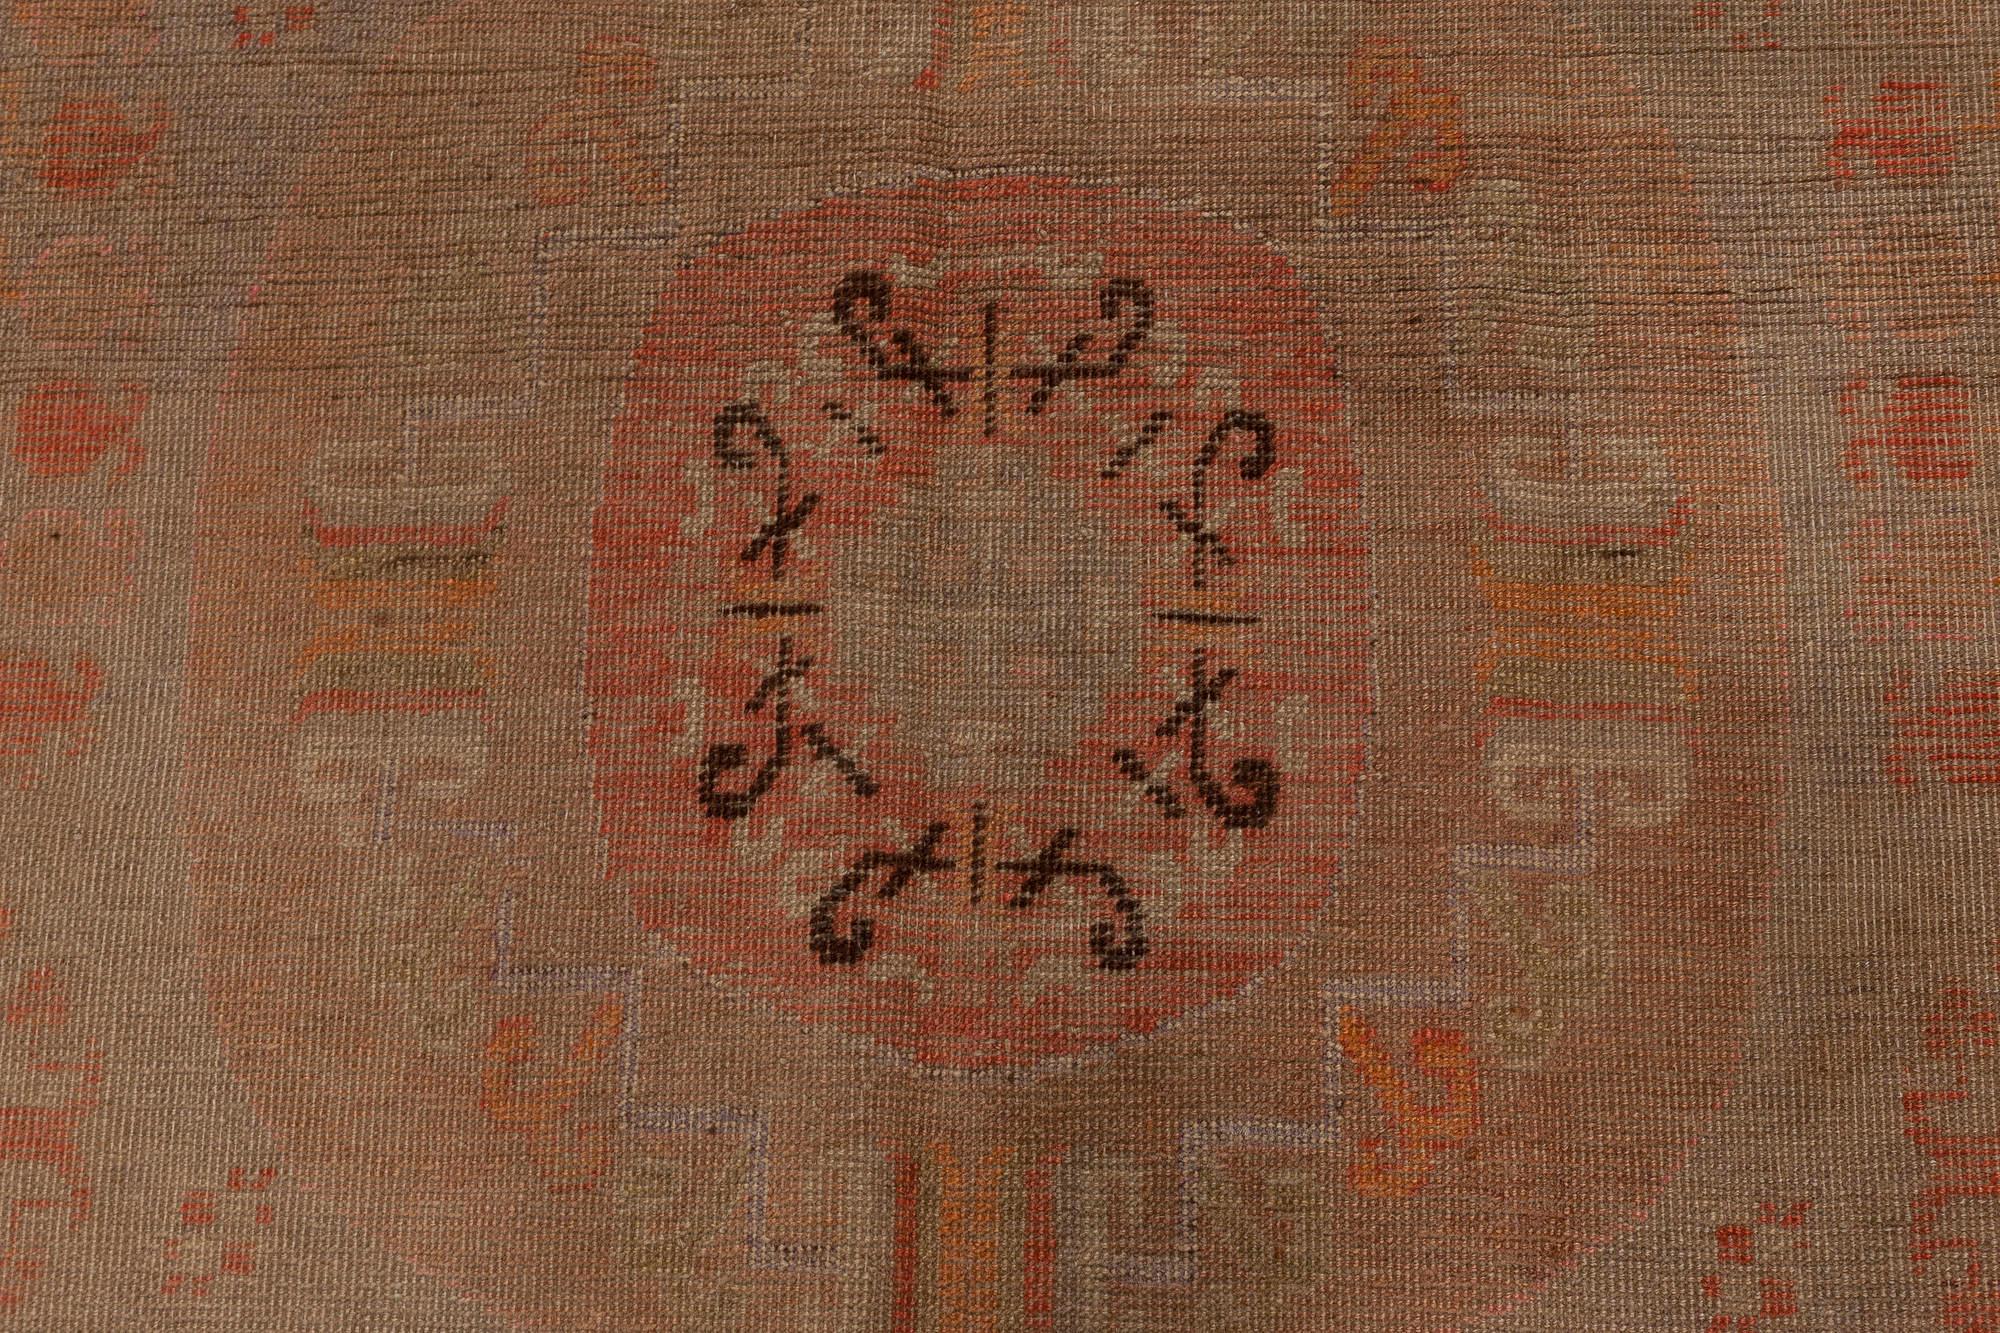 Midcentury Samarkand handmade wool rug
Size: 6'2